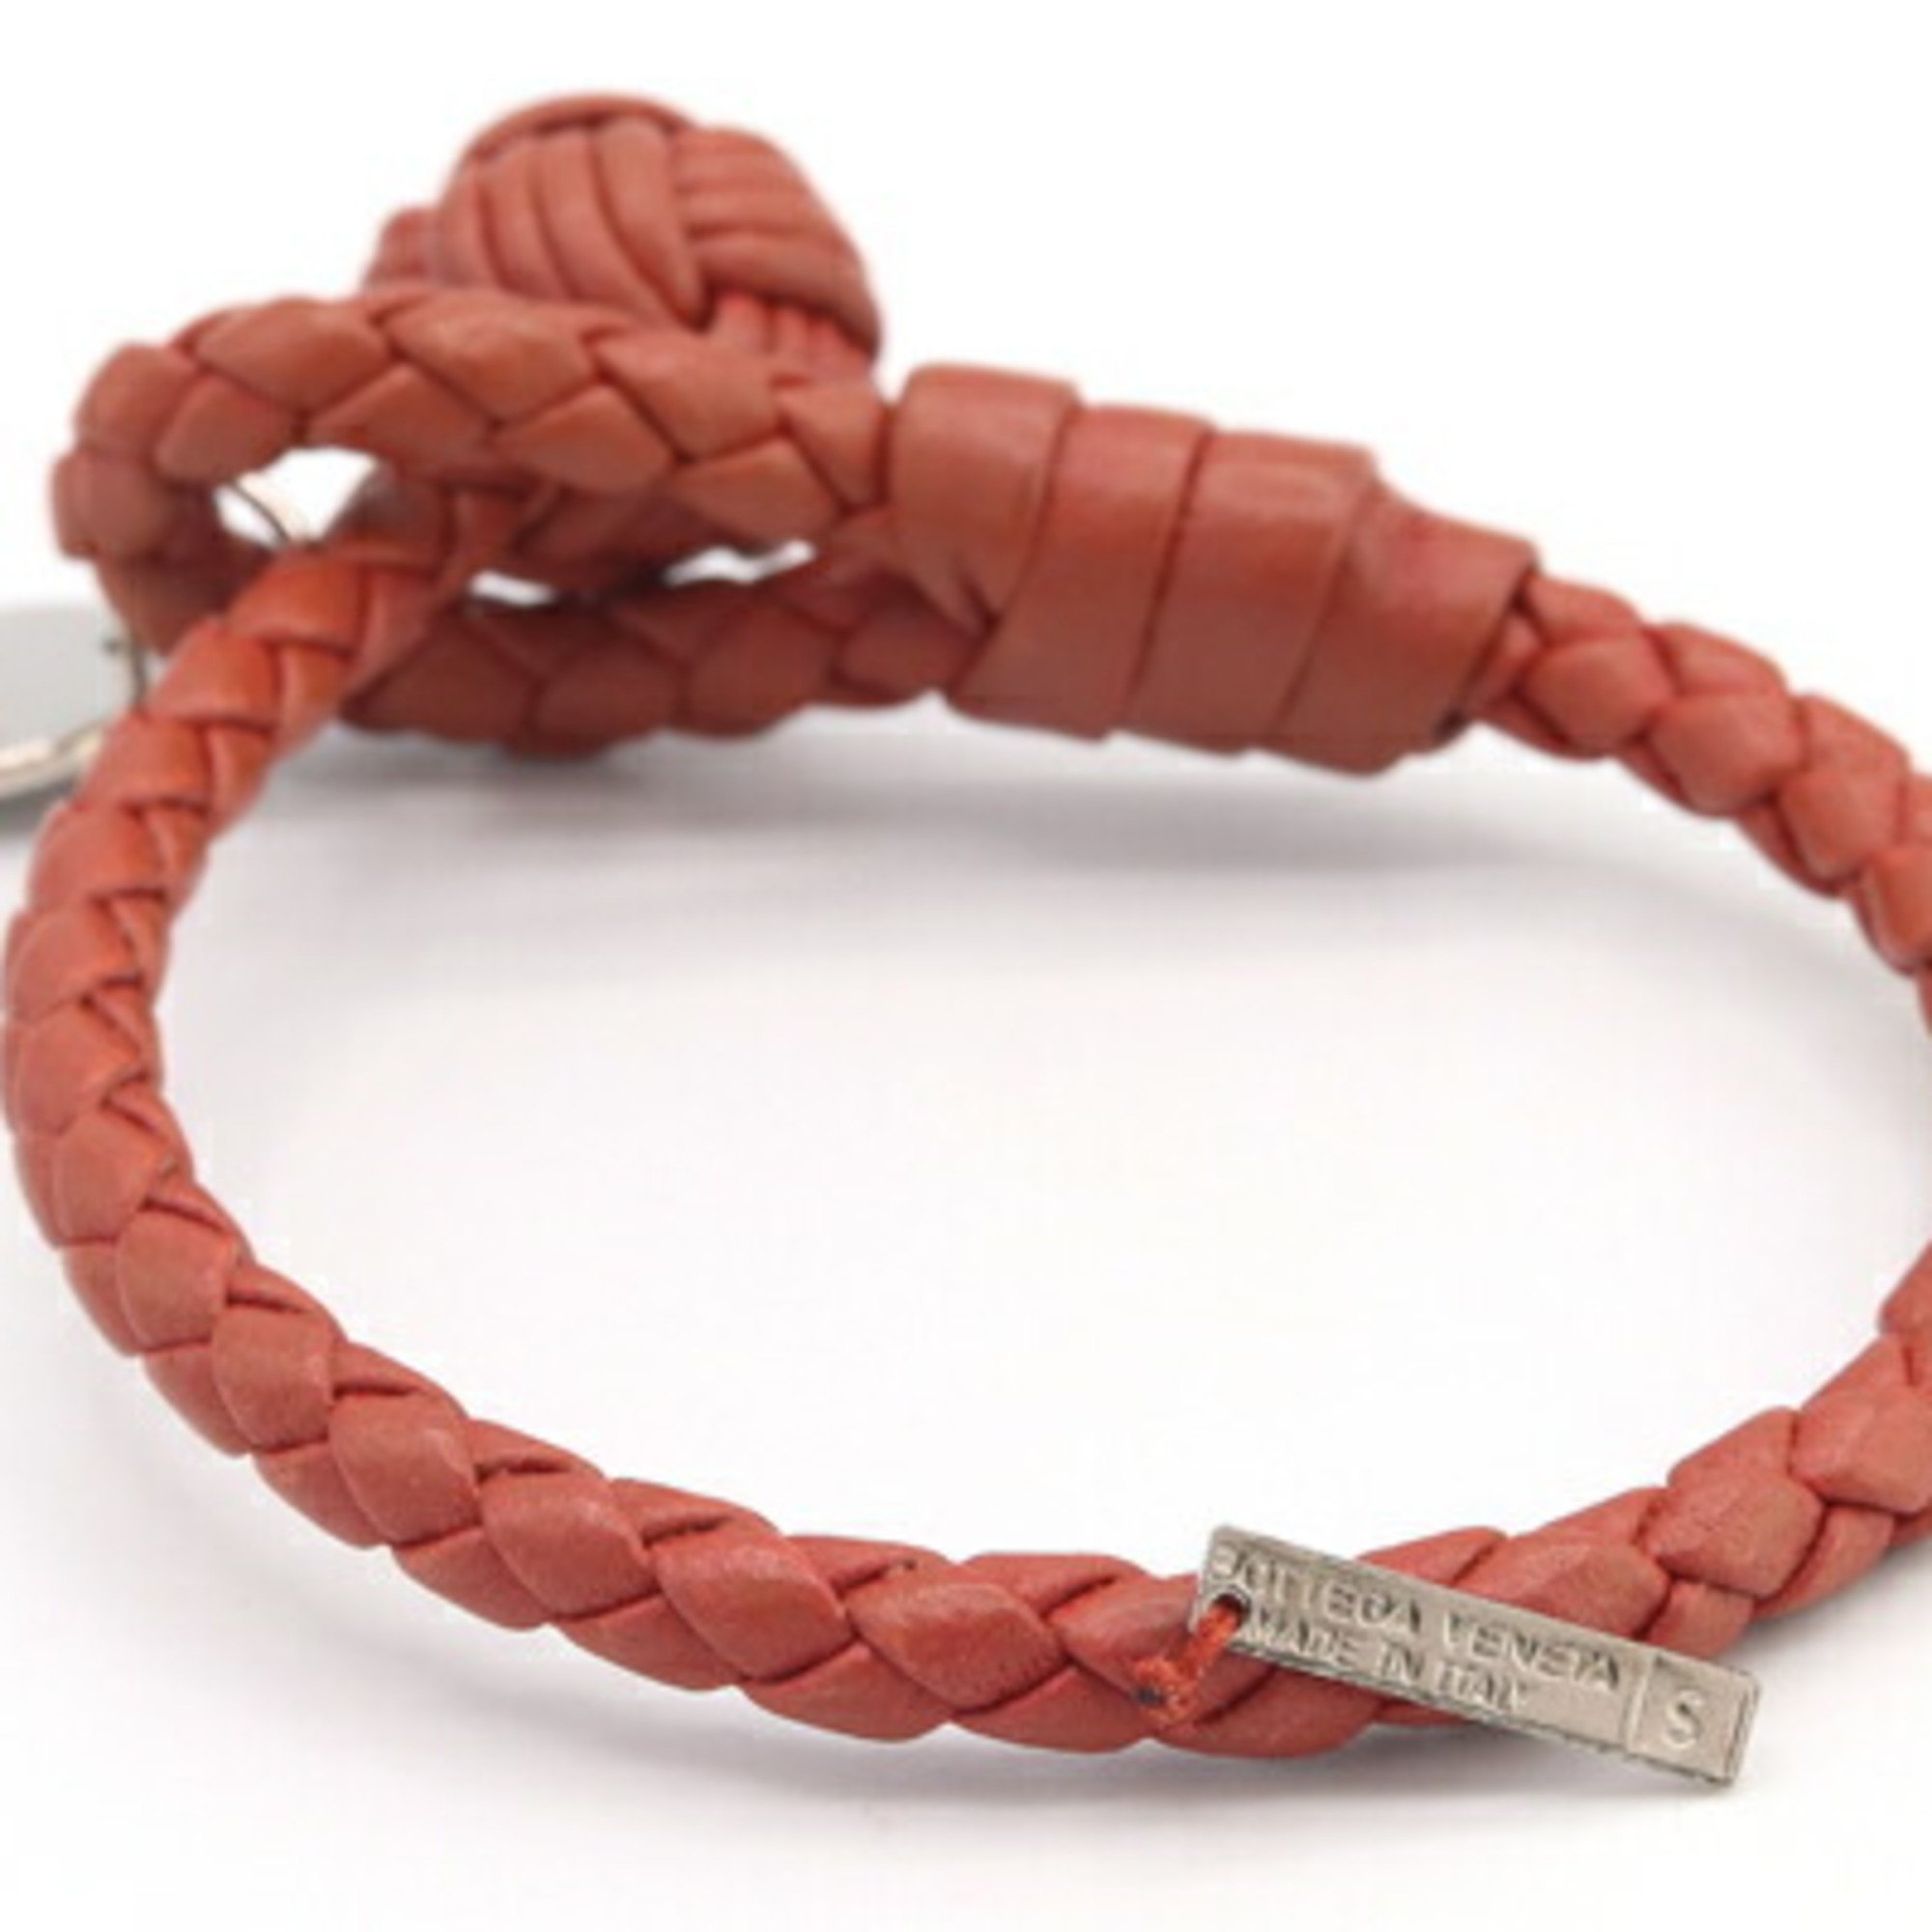 Bottega Veneta Bracelet Intrecciato 113546 Brown Leather Bangle for Women and Men BOTTEGA VENETA